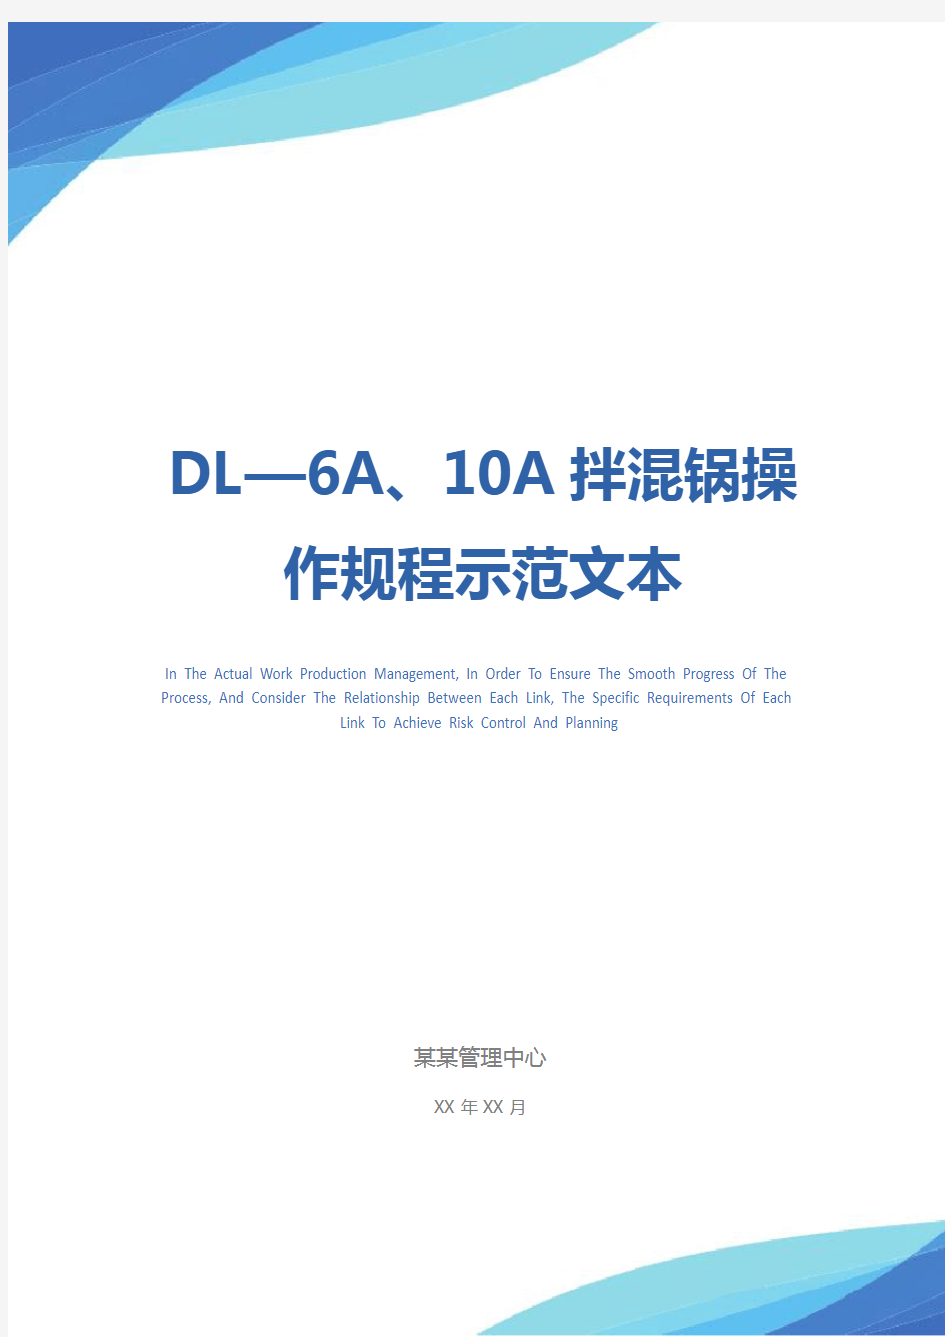 DL—6A、10A拌混锅操作规程示范文本